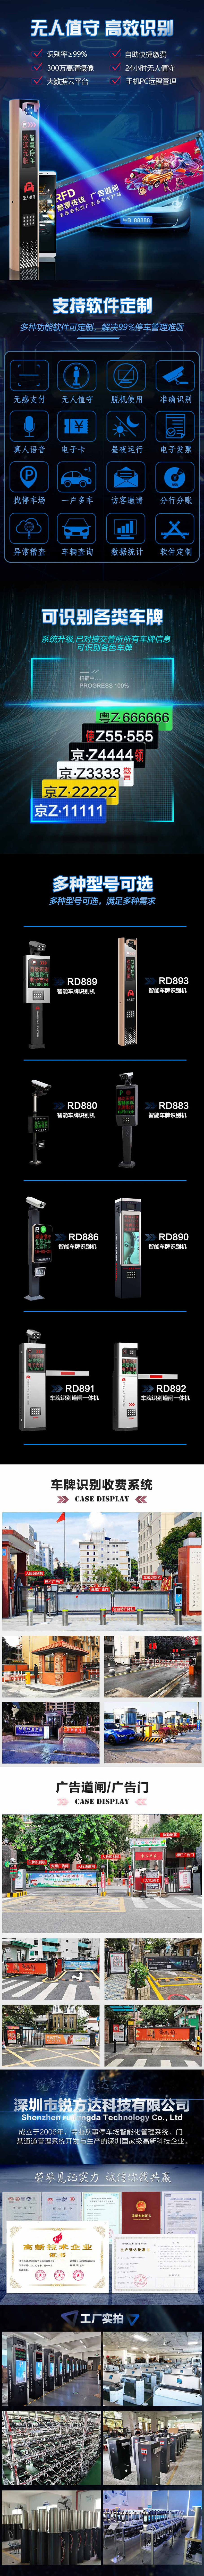 RD880車牌識別系統